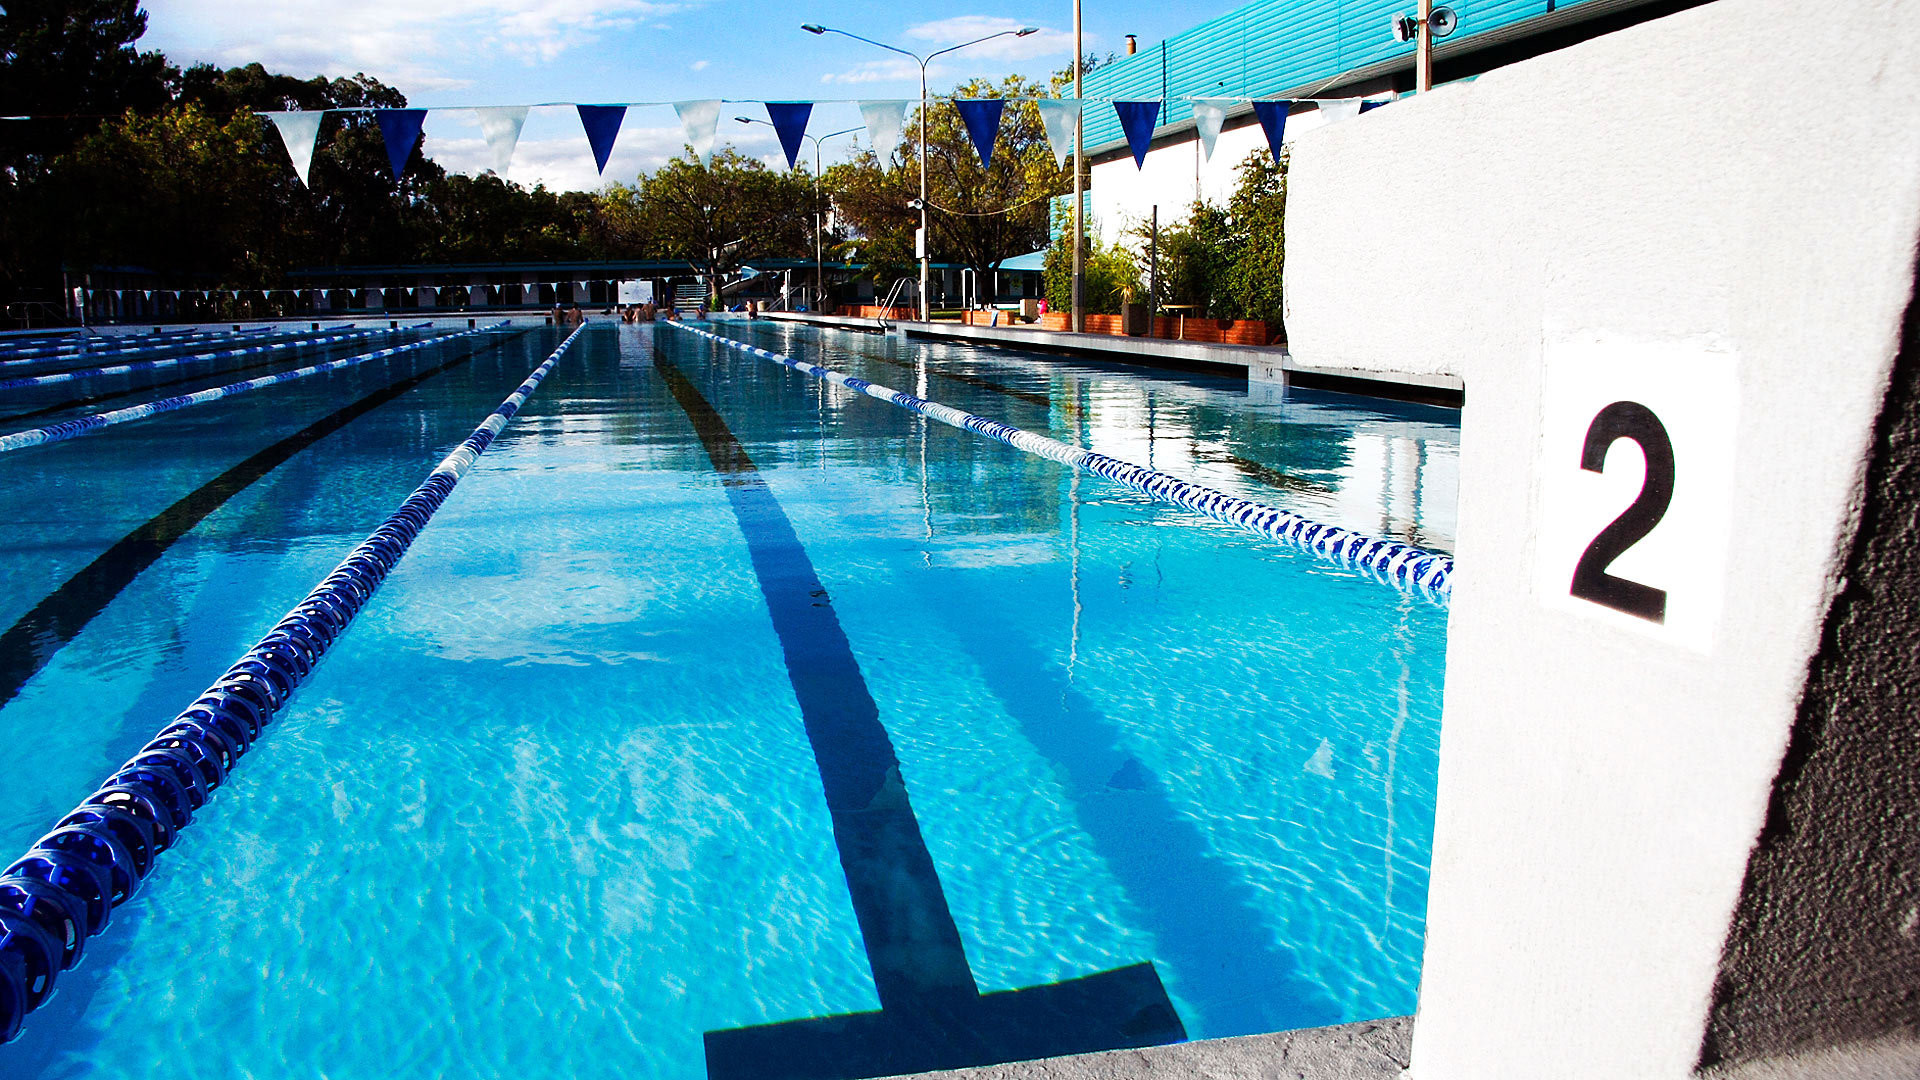 Phillip Swimming Pool, Woden, Canberra, Swimming Pools - Swimming Pool - HD Wallpaper 